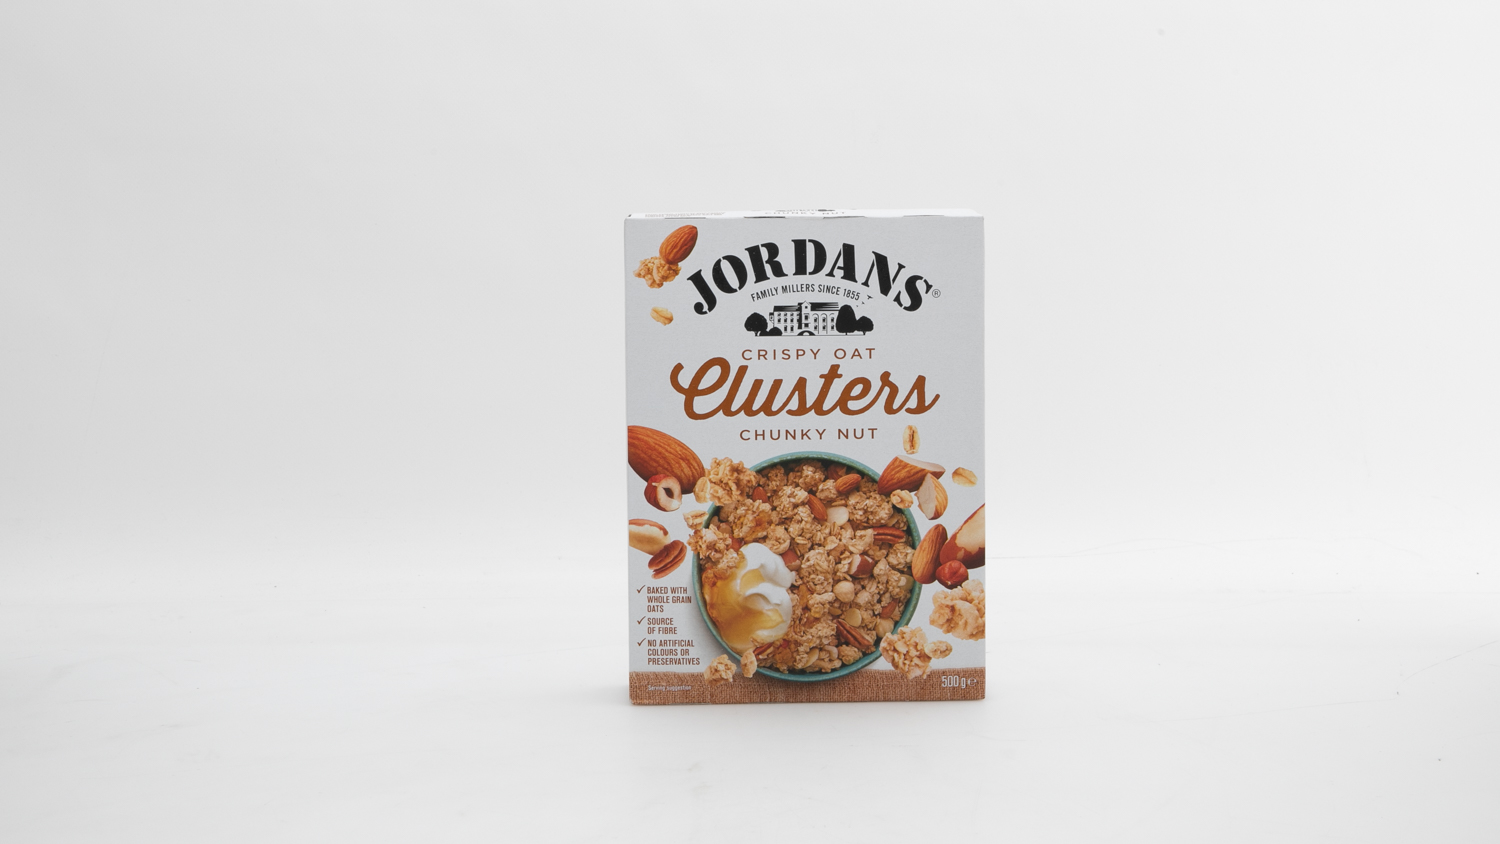 https://pdbimg.choice.com.au/jordans-chunky-nut-crispy-oat-clusters_1.jpg